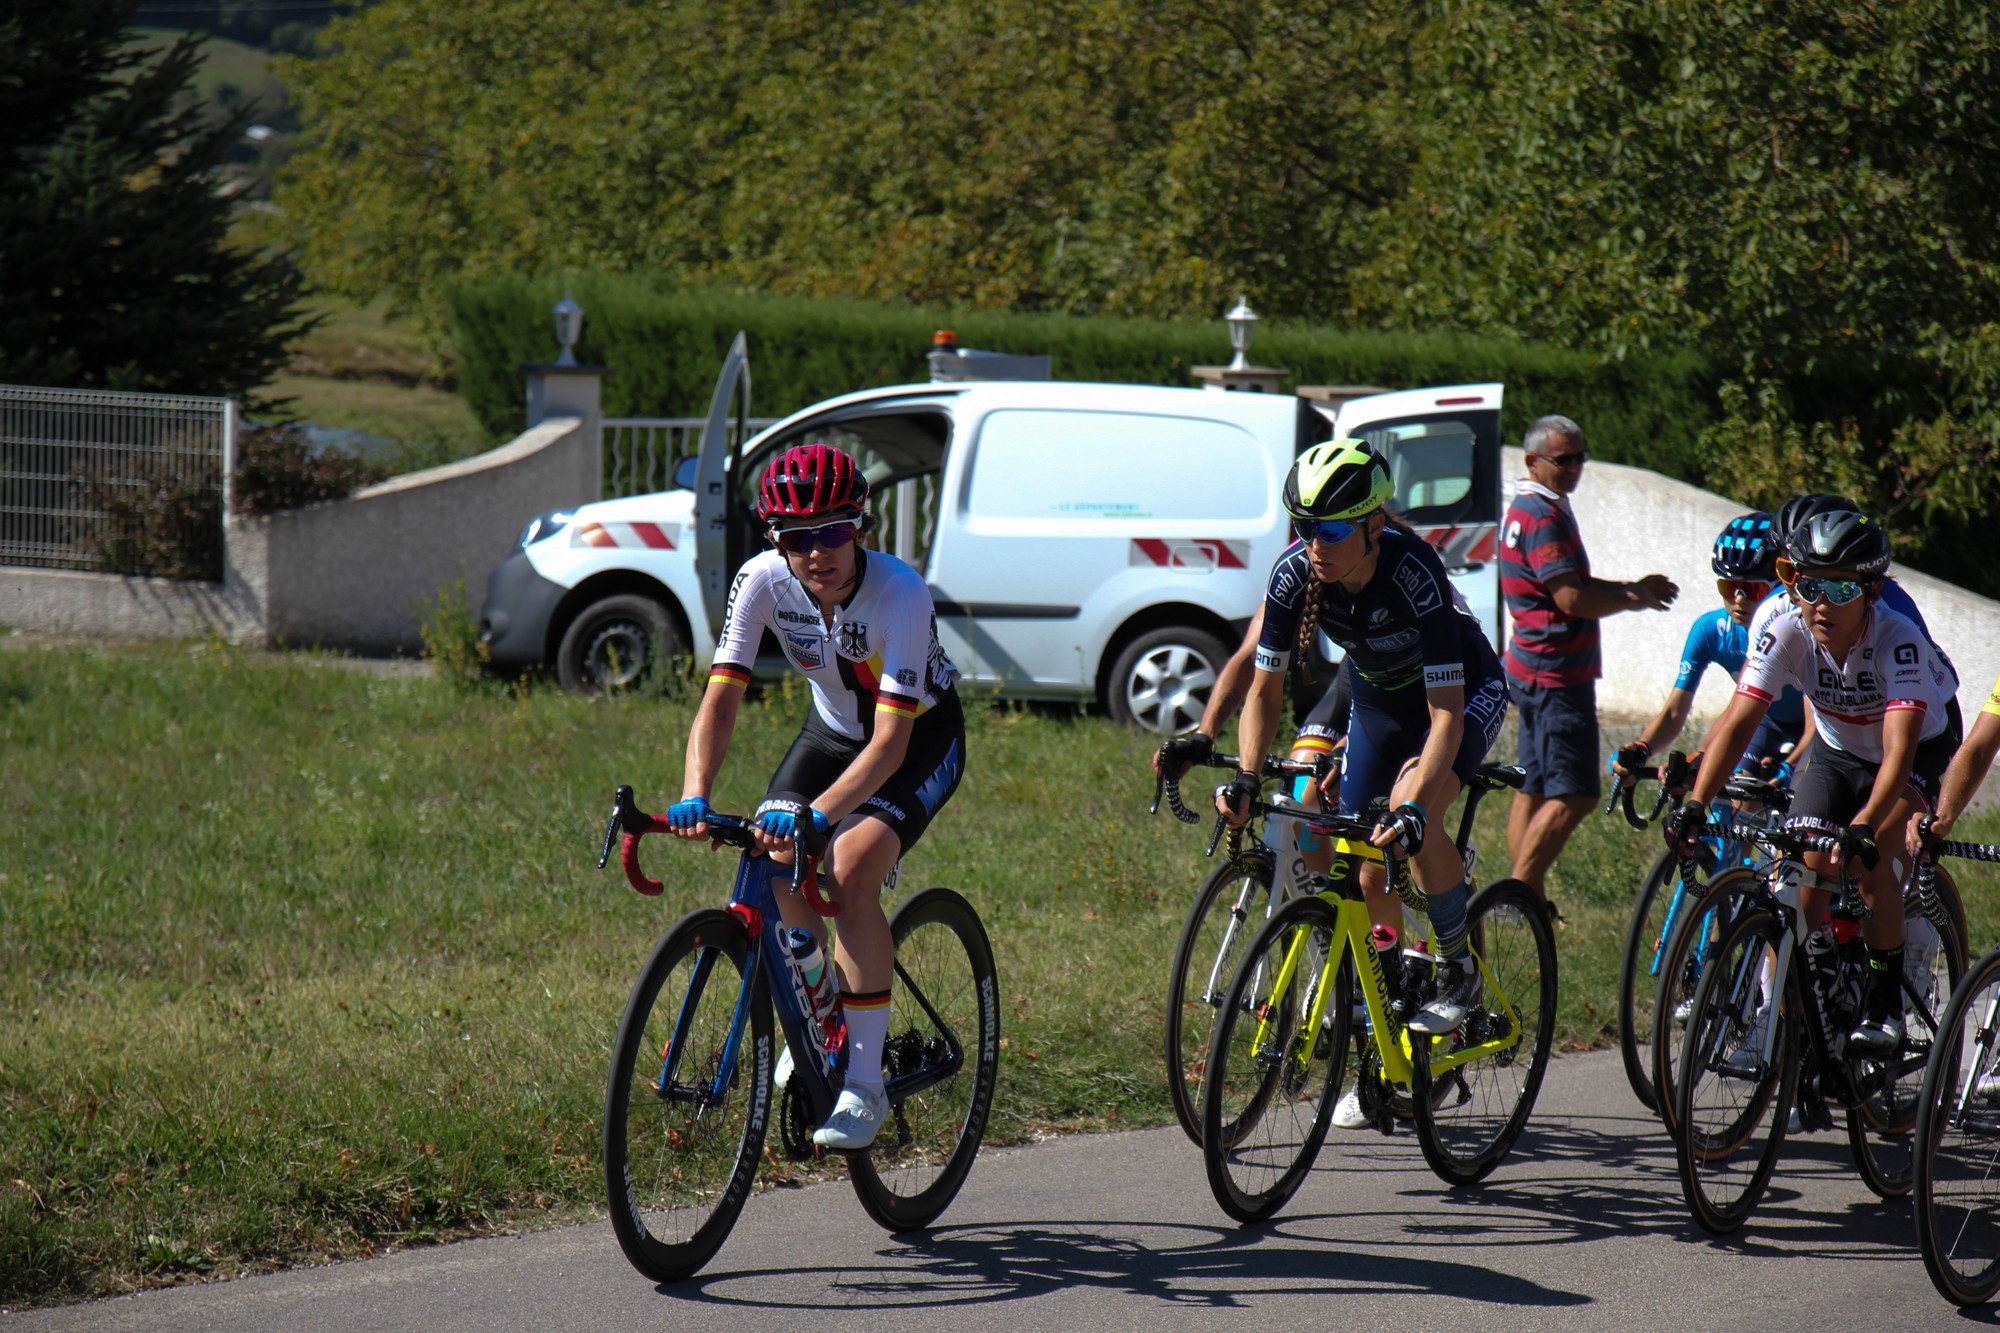  tour de France cycliste féminin